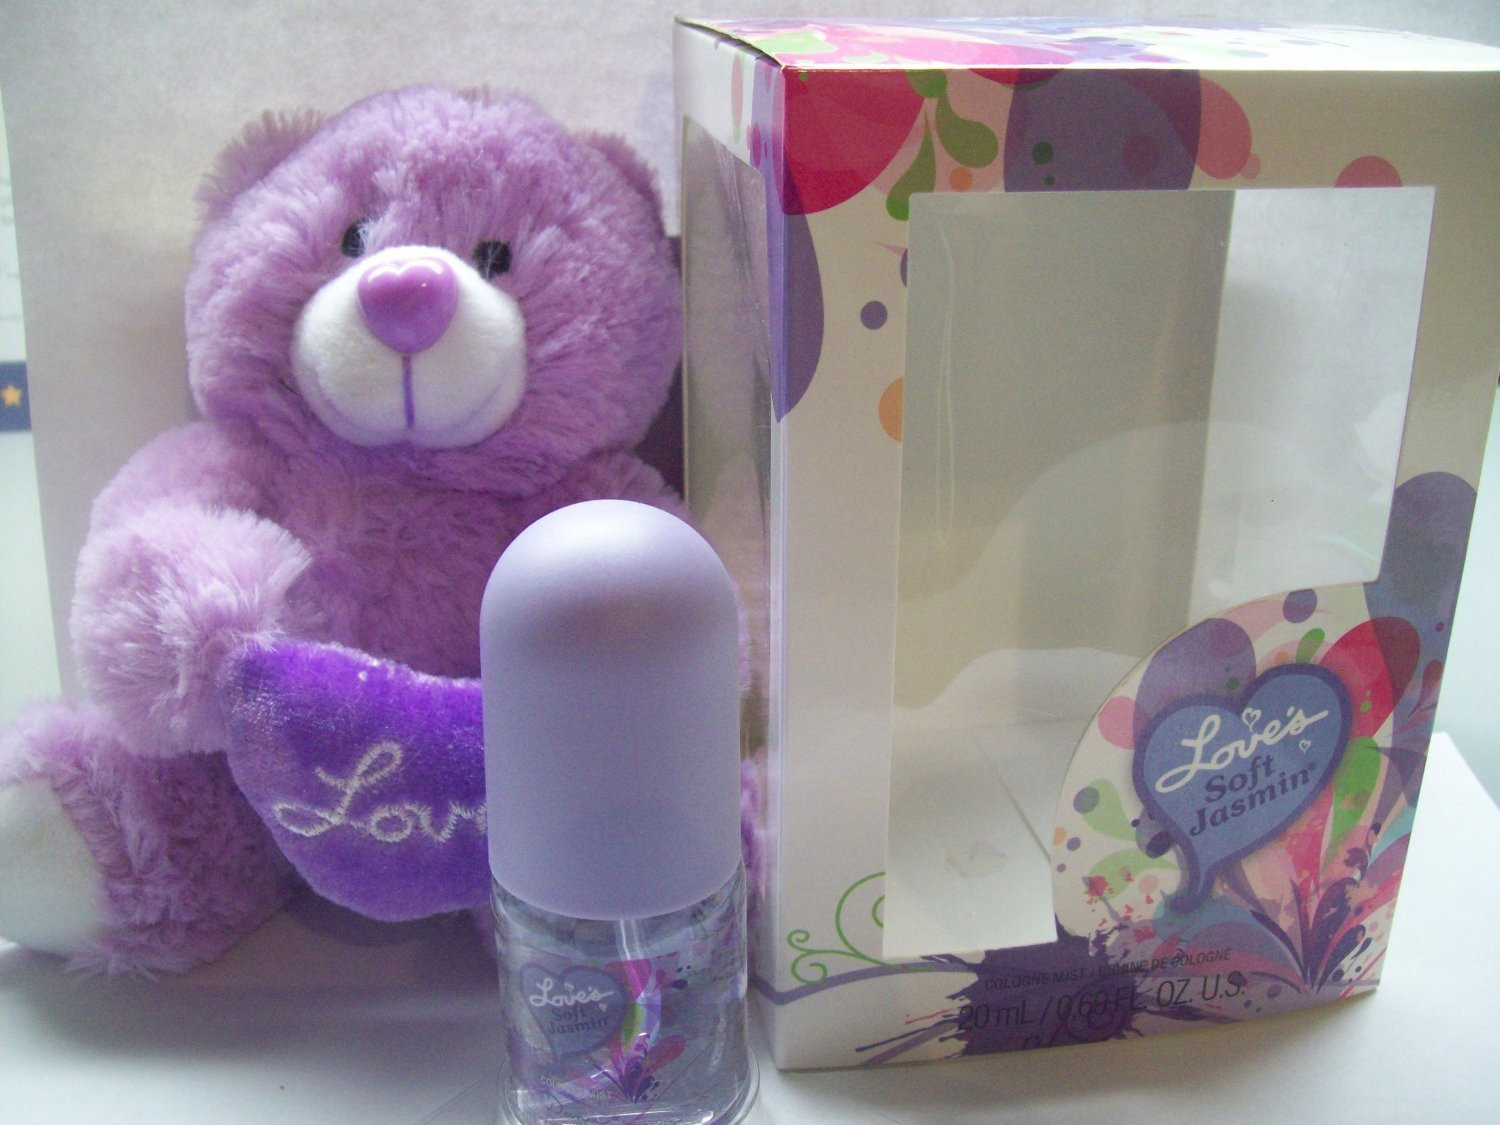 Loves Baby Soft Perfume Gift Set
 Amazon Dana Love s Baby Soft Gift Set with Teddy